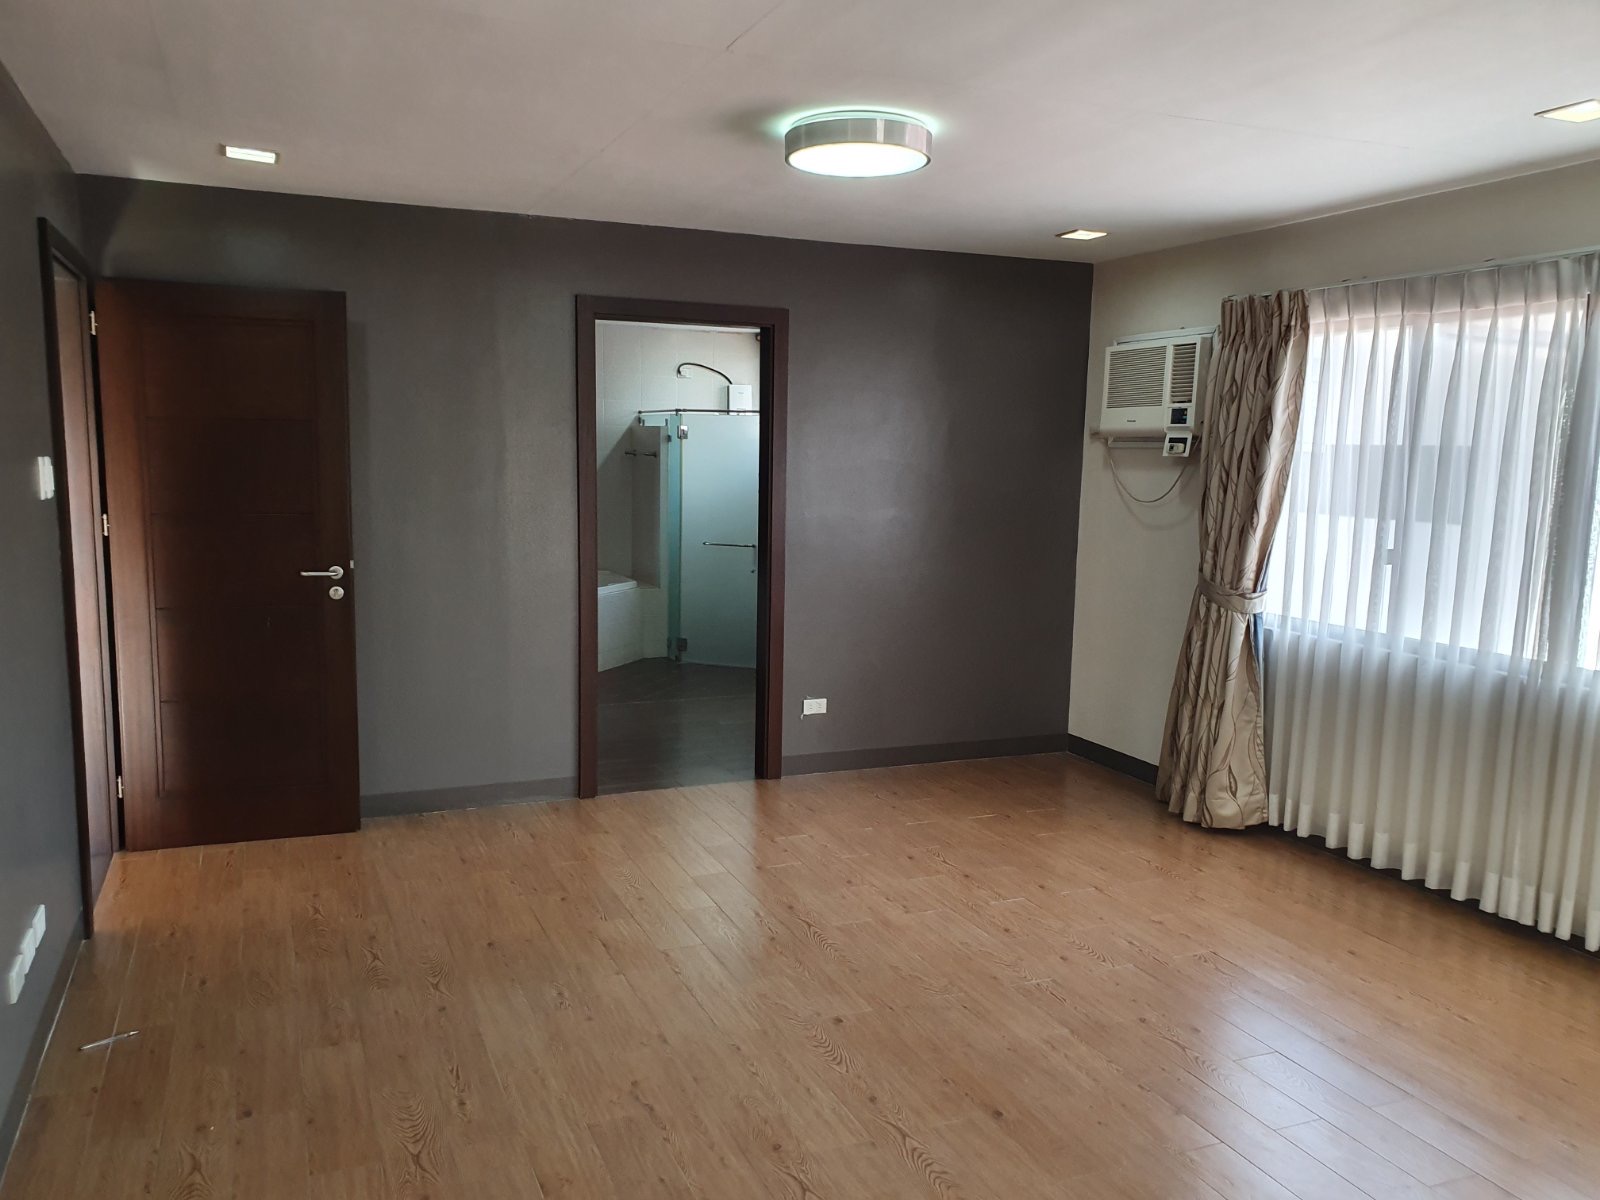 4-bedroom-spacious-and-semi-furnished-house-in-banilad-cebu-city-cebu